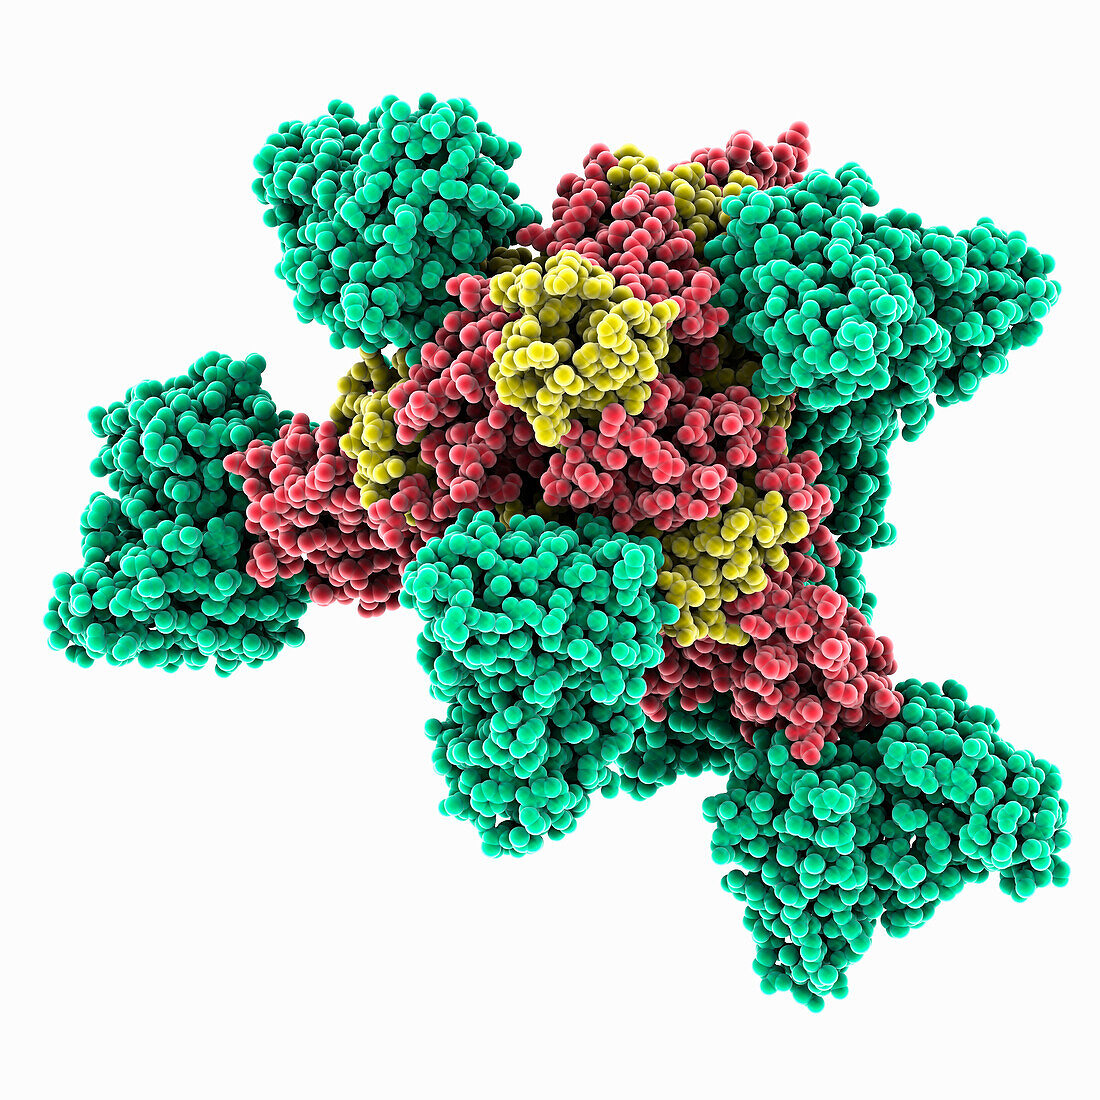 Ebola virus complexed with Inmazeb, molecular model